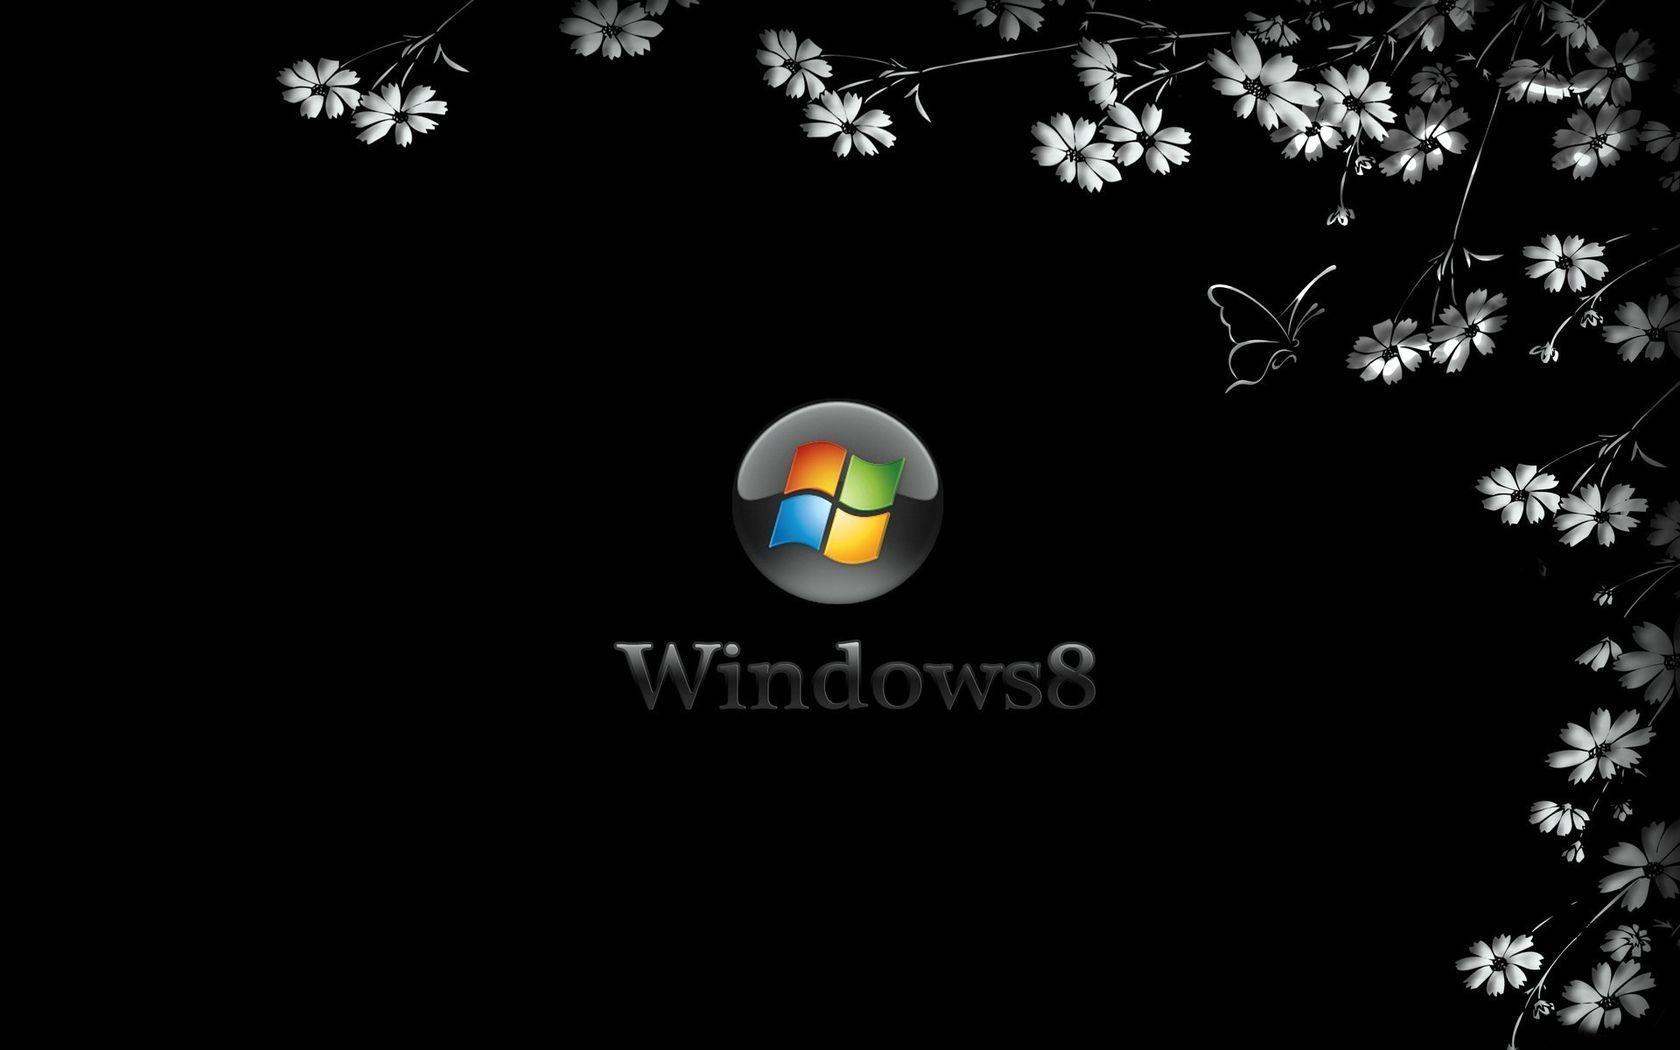 Wallpaper For > Windows 8 Black Wallpaper HD For Desktop